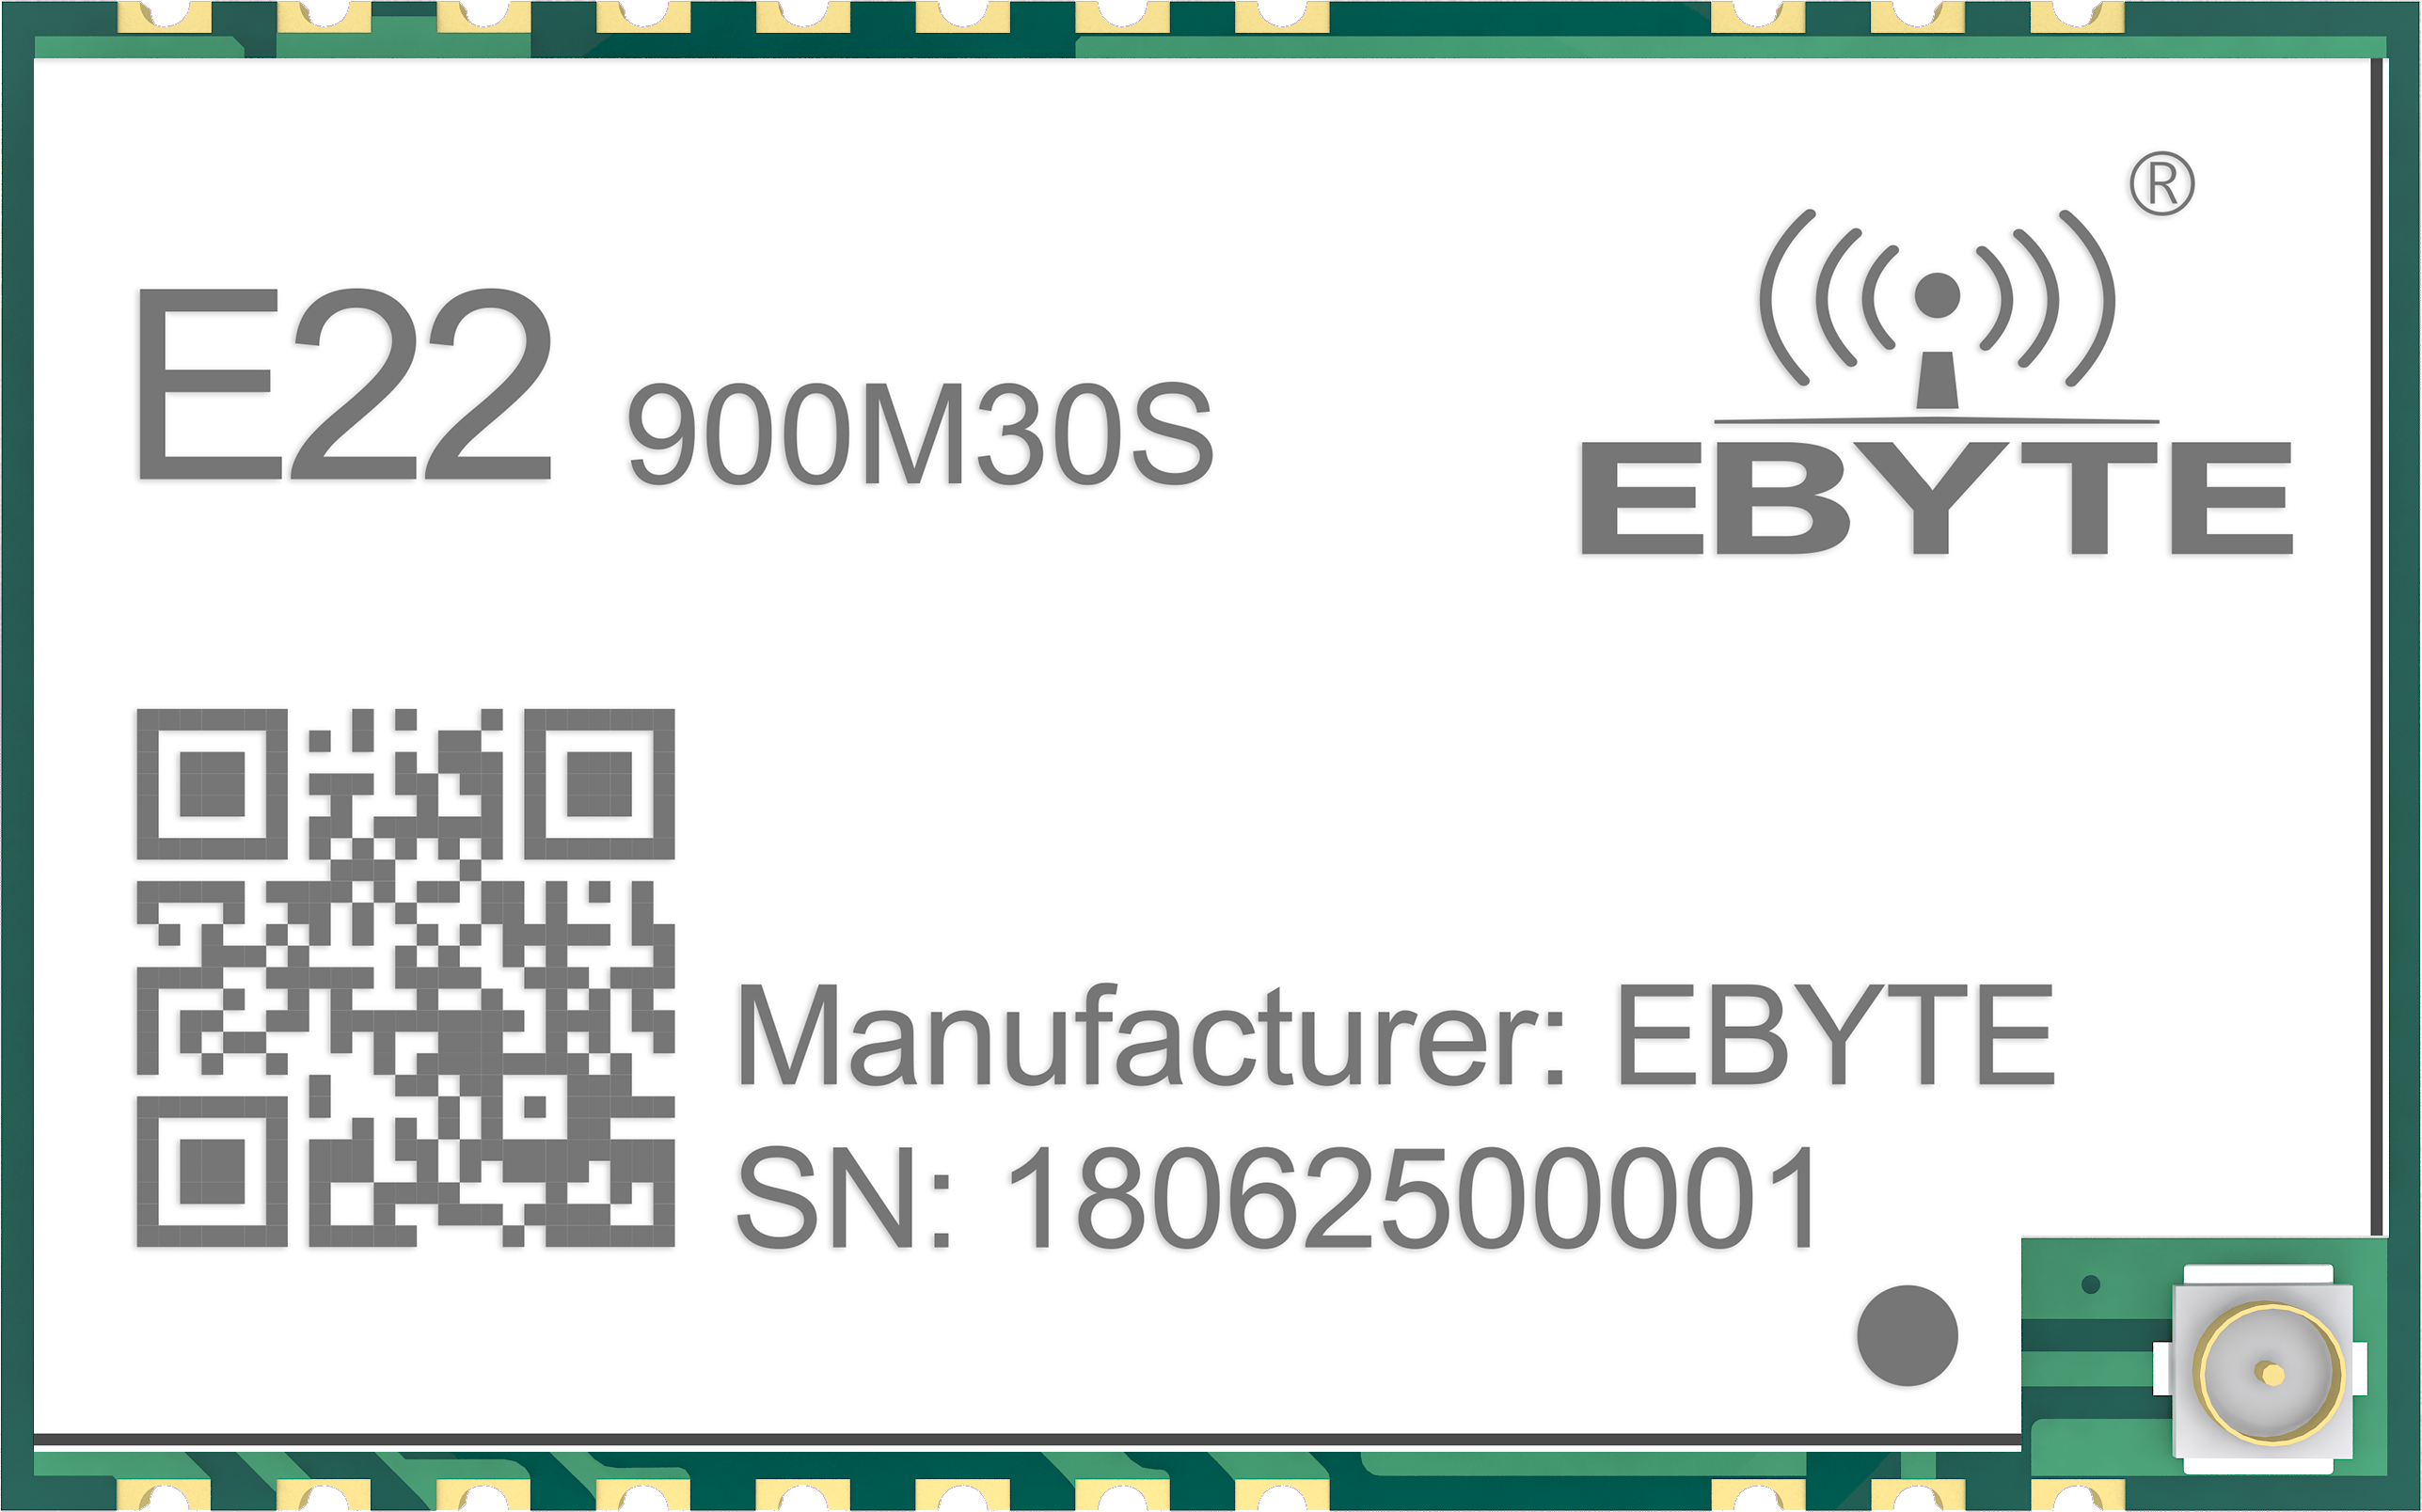 EBYTE E22-900M30S SX1262 LoRa Module 868MHz Wireless Module 30dBm 12km Range IPEX Antenna SPI Interface Low Power Consumption